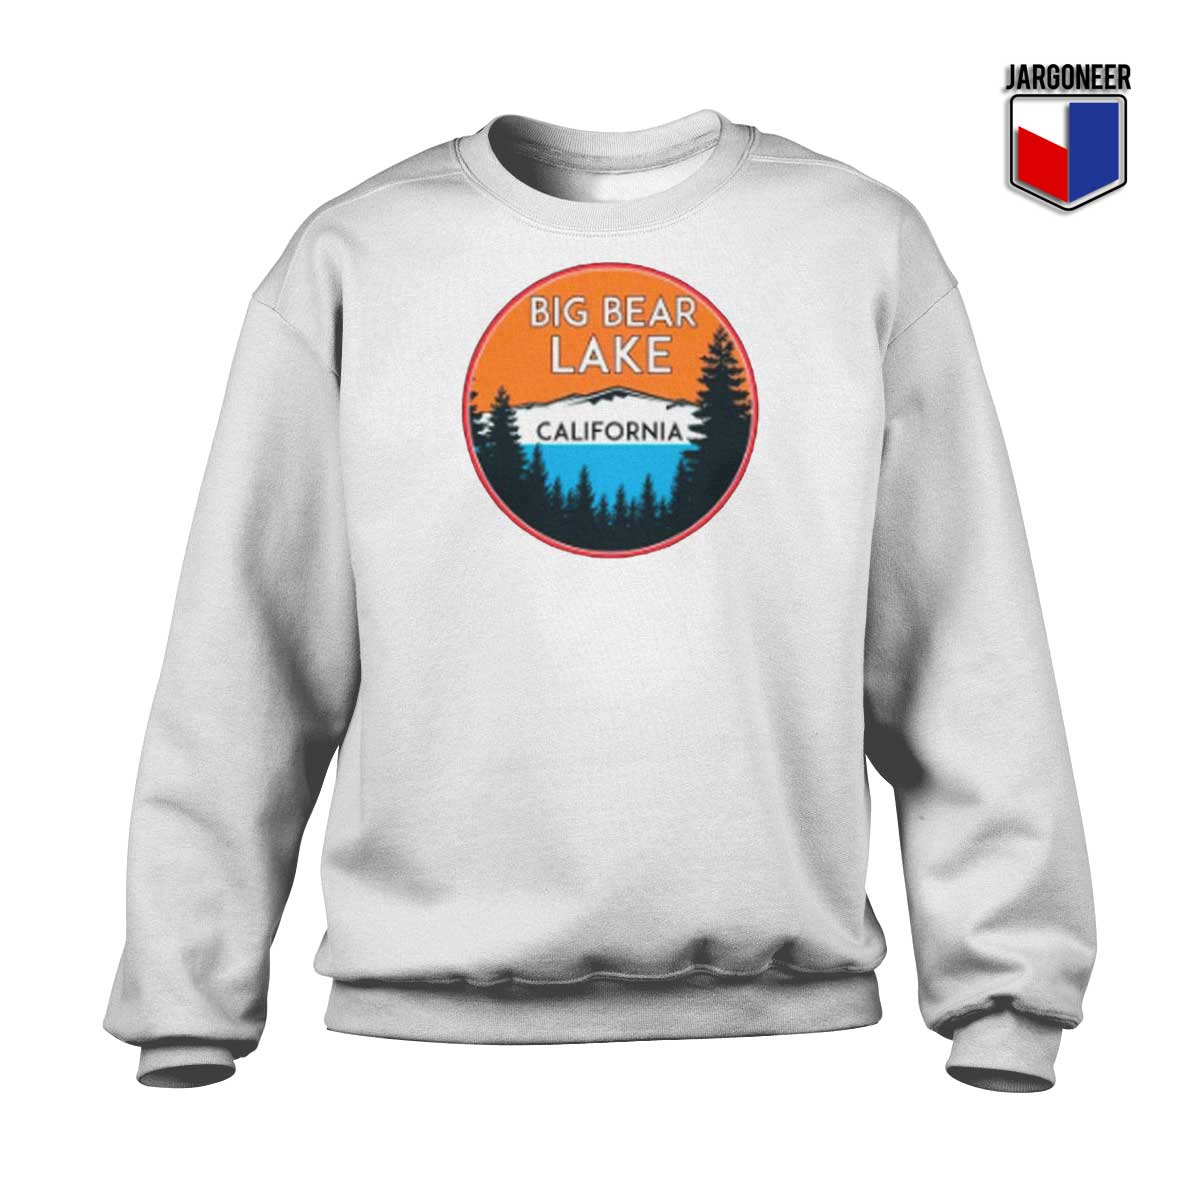 Big Bear Lake California Sweatshirt - Shop Unique Graphic Cool Shirt Designs